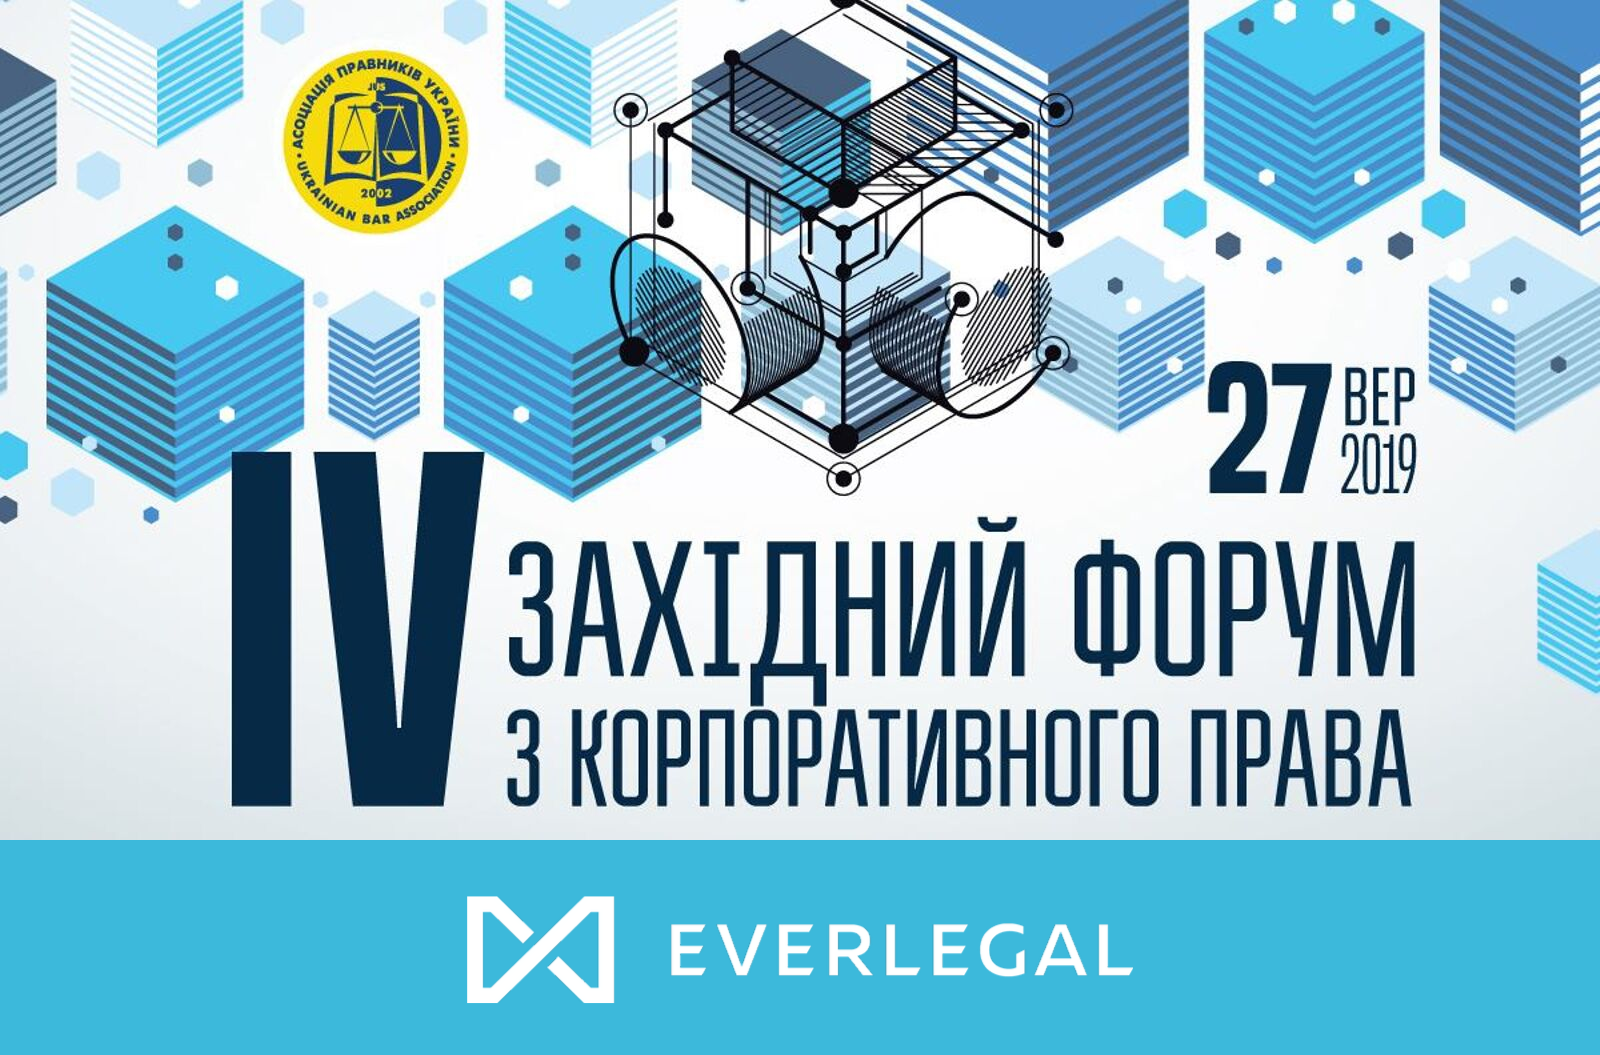 EVERLEGAL at Corporate Law Forum in Lviv